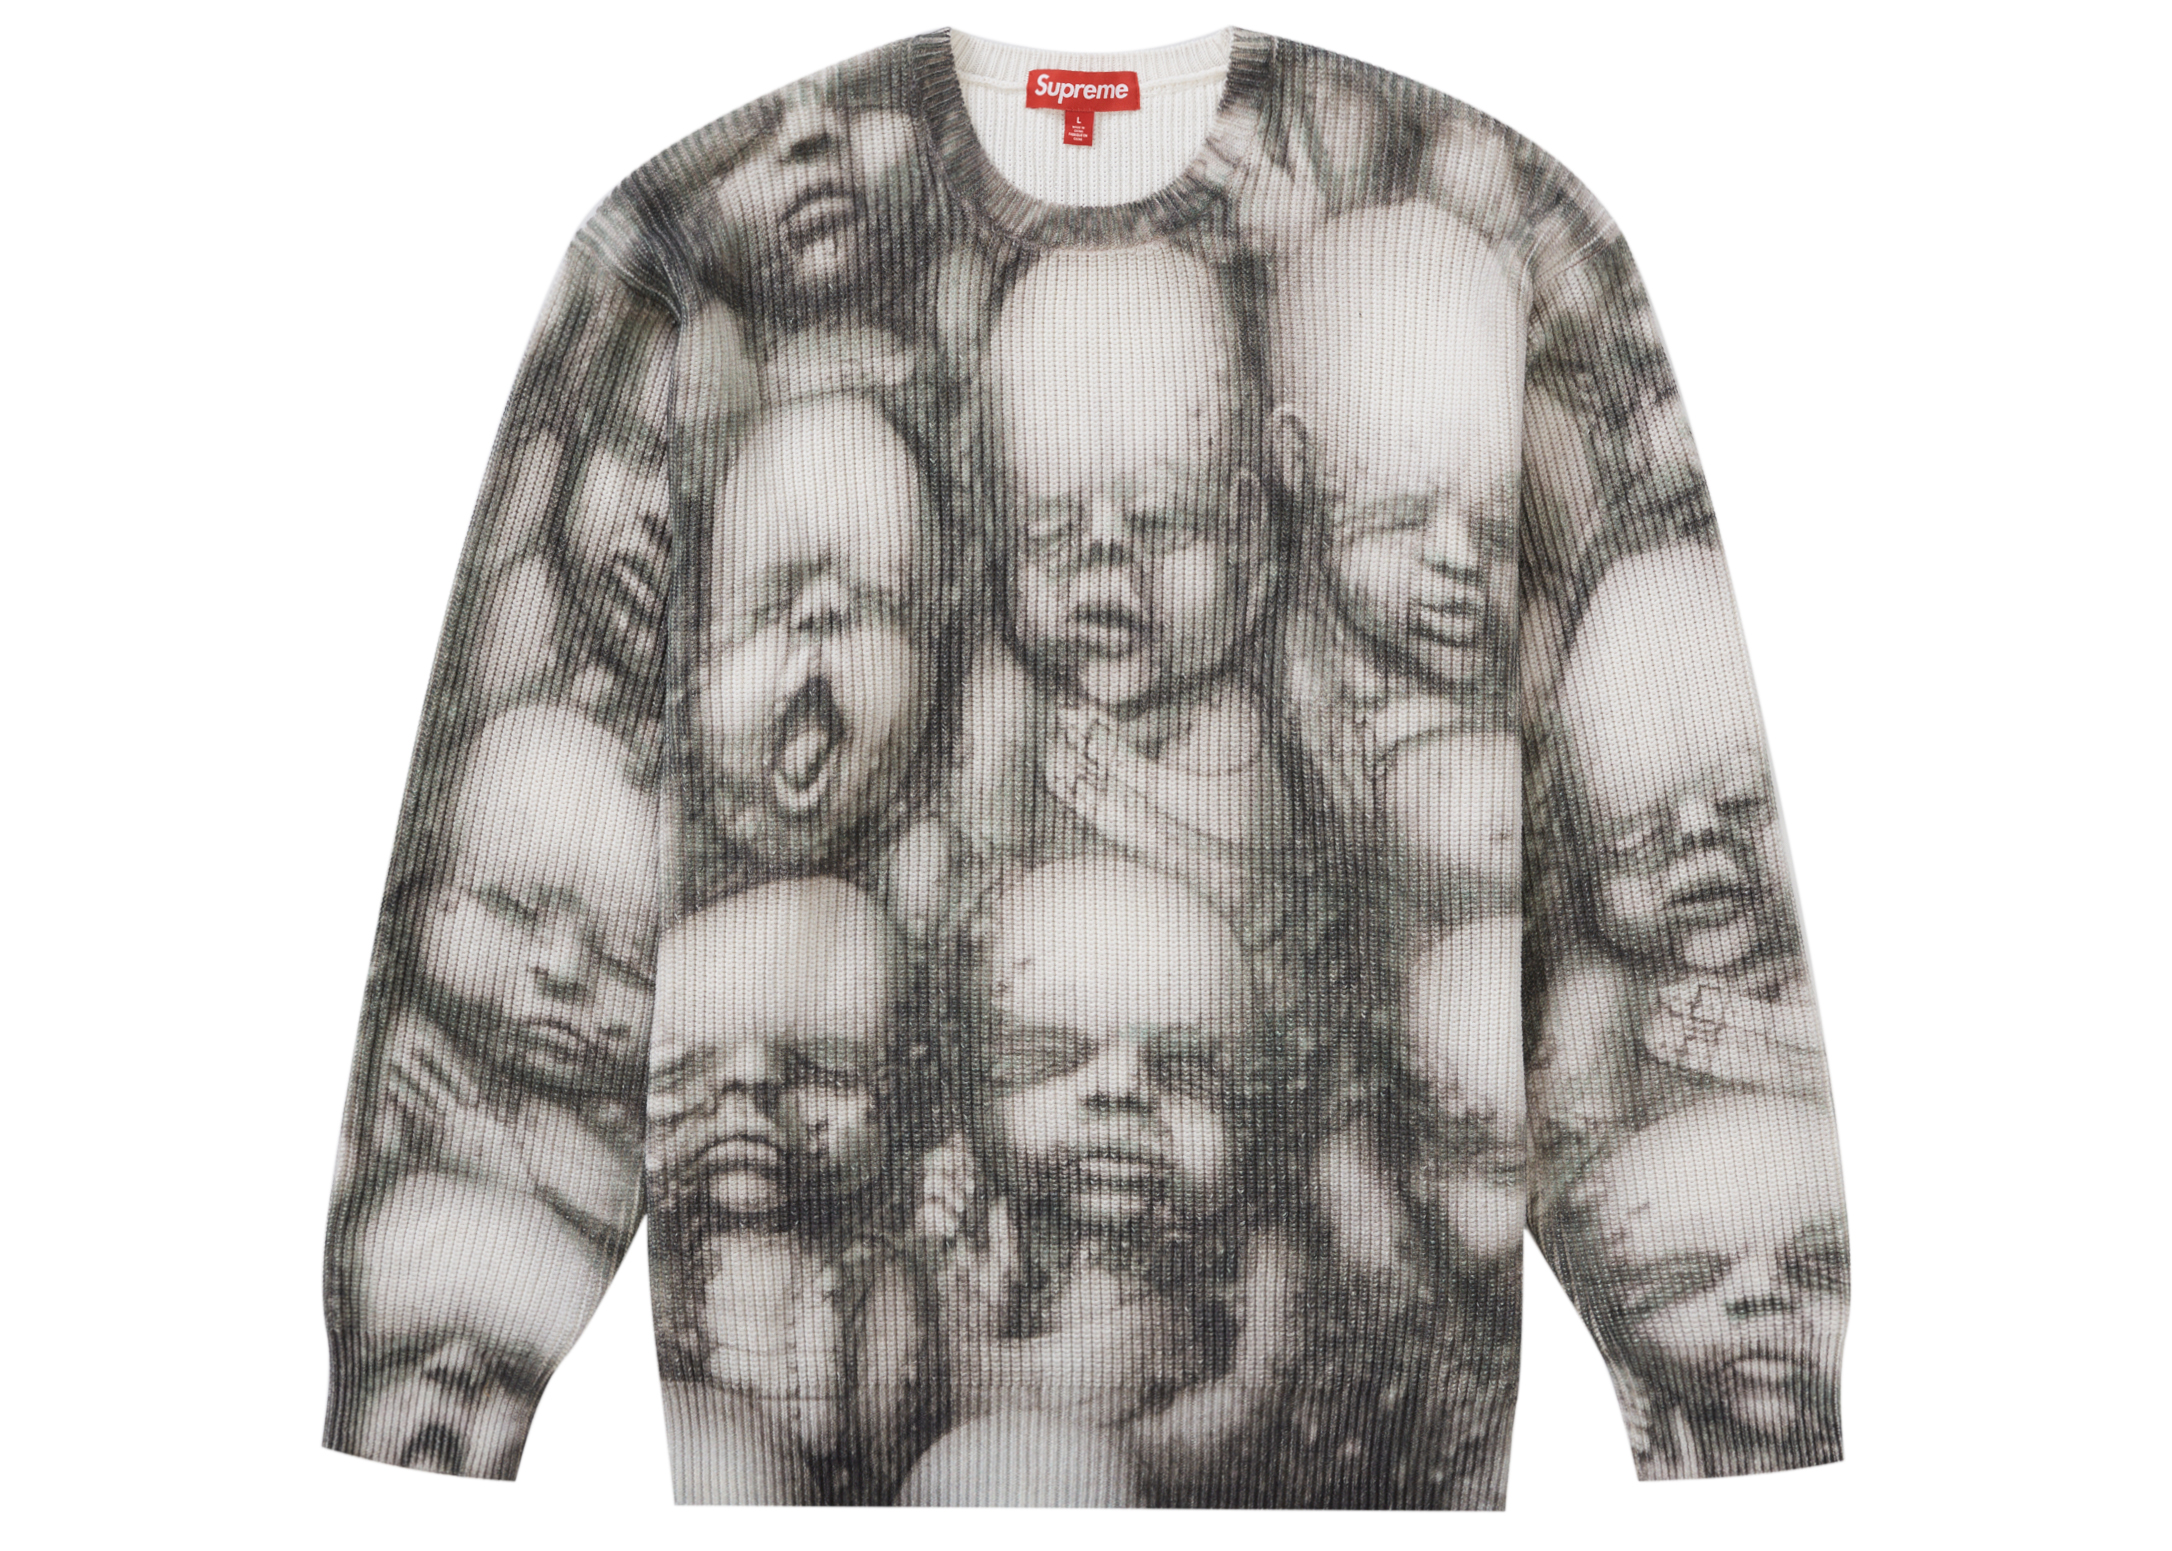 Supreme H.R. Giger Sweater